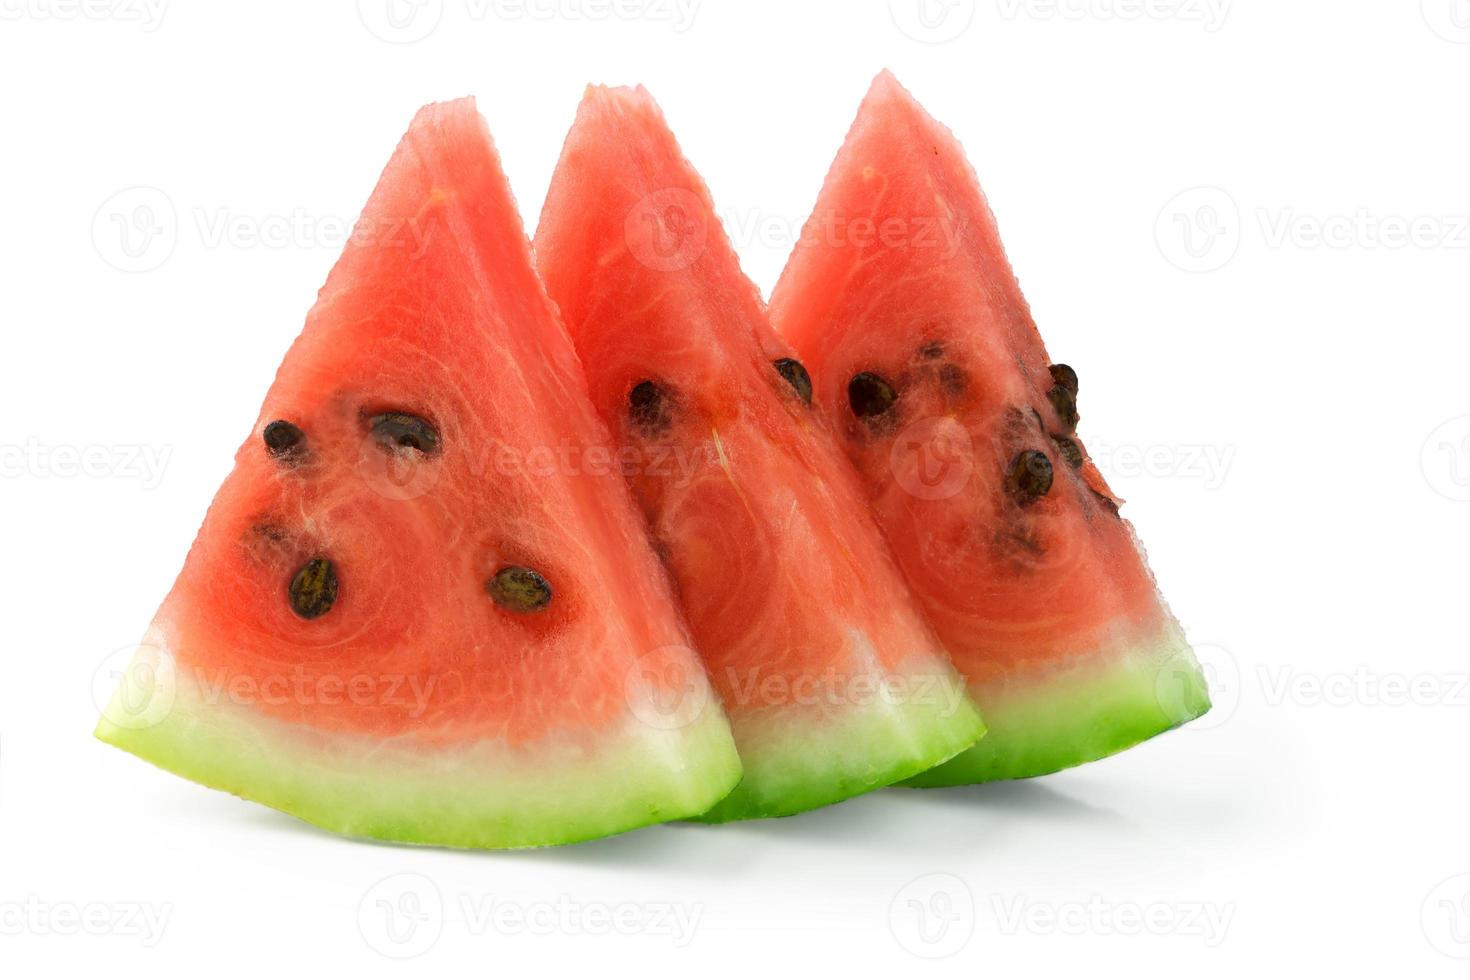 skivad vattenmelon foto